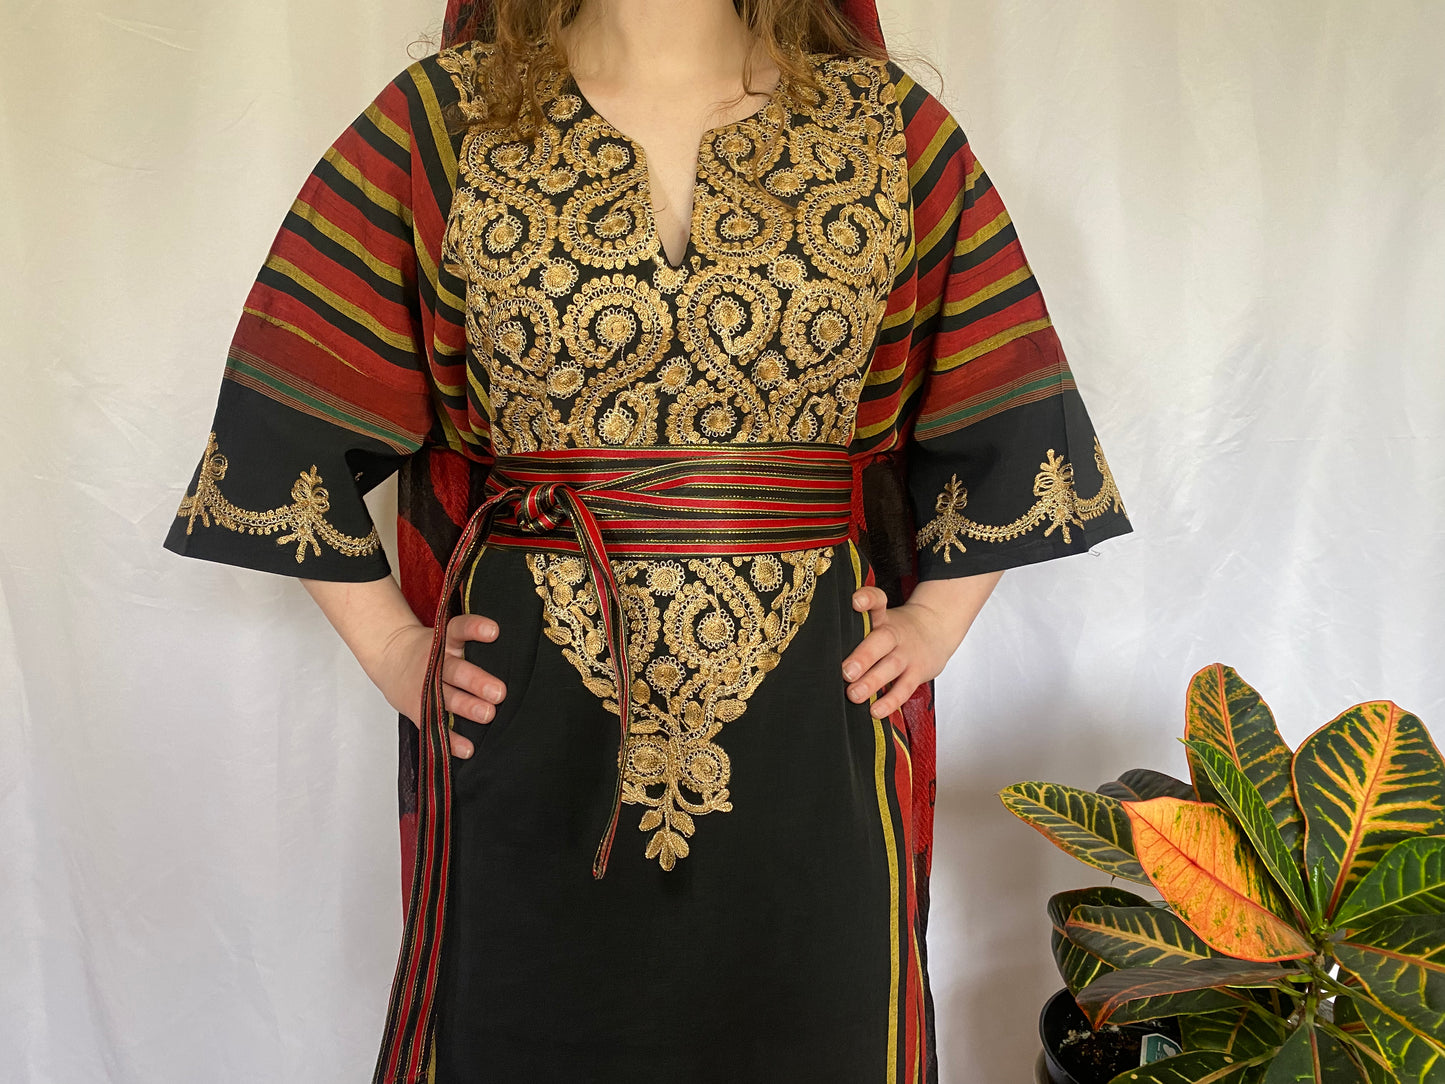 The Arabesque Dress